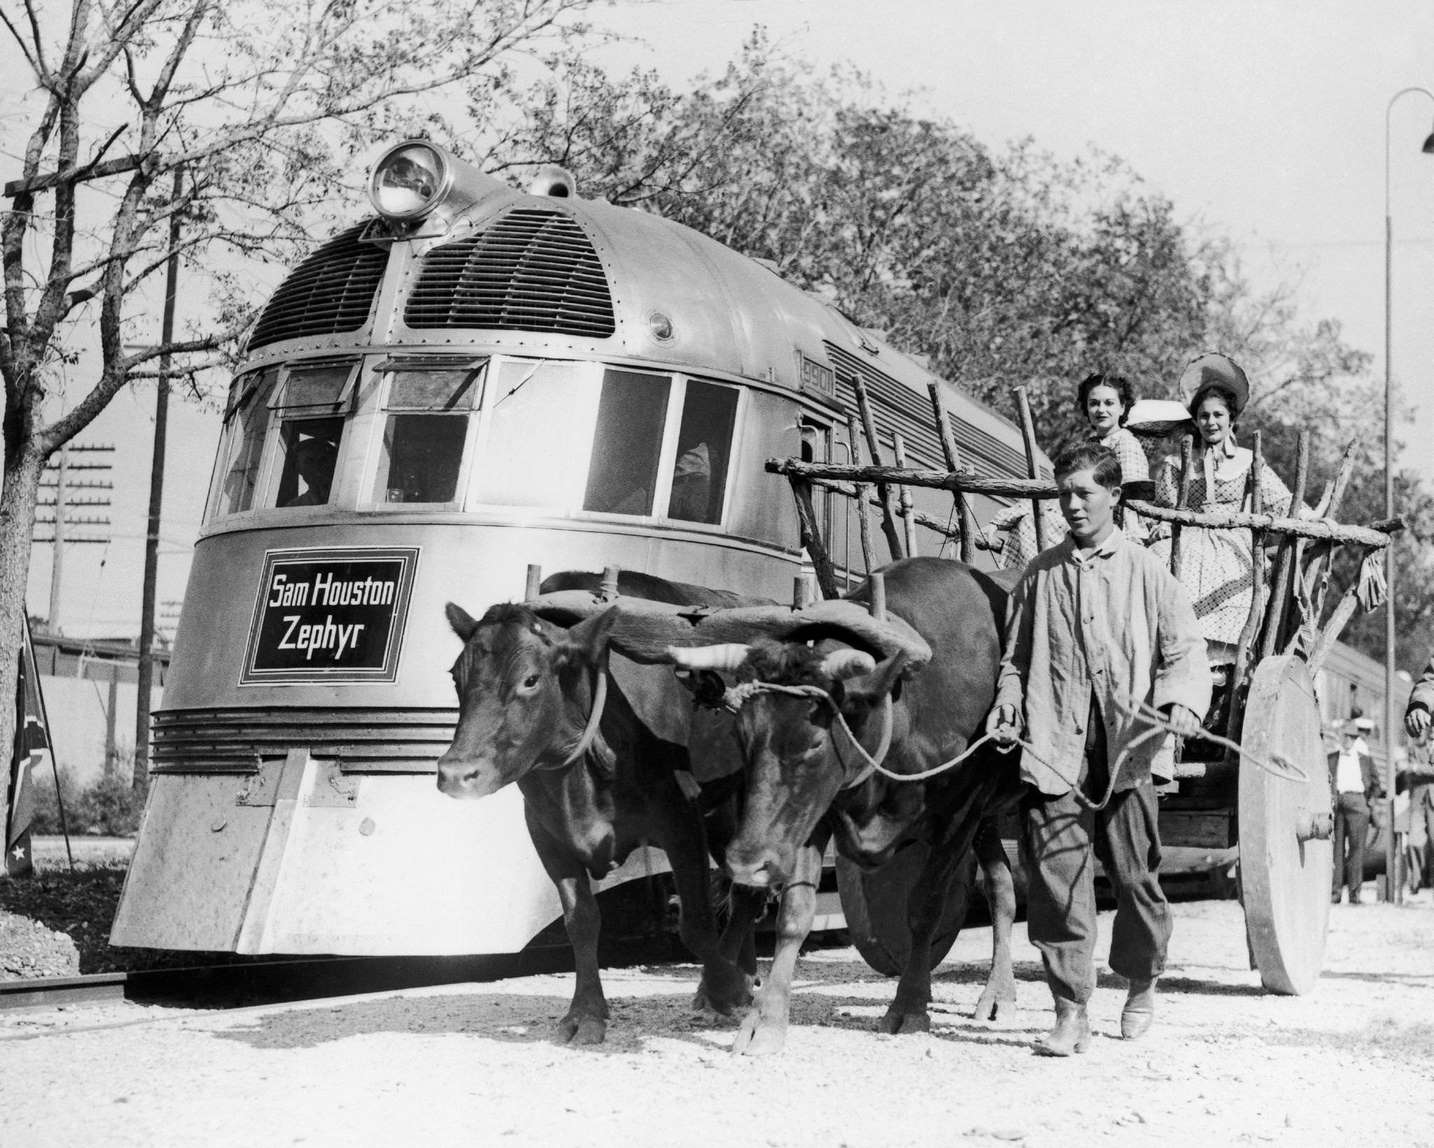 The Train "Sam Houston Zephyr" in Dallas, 1956